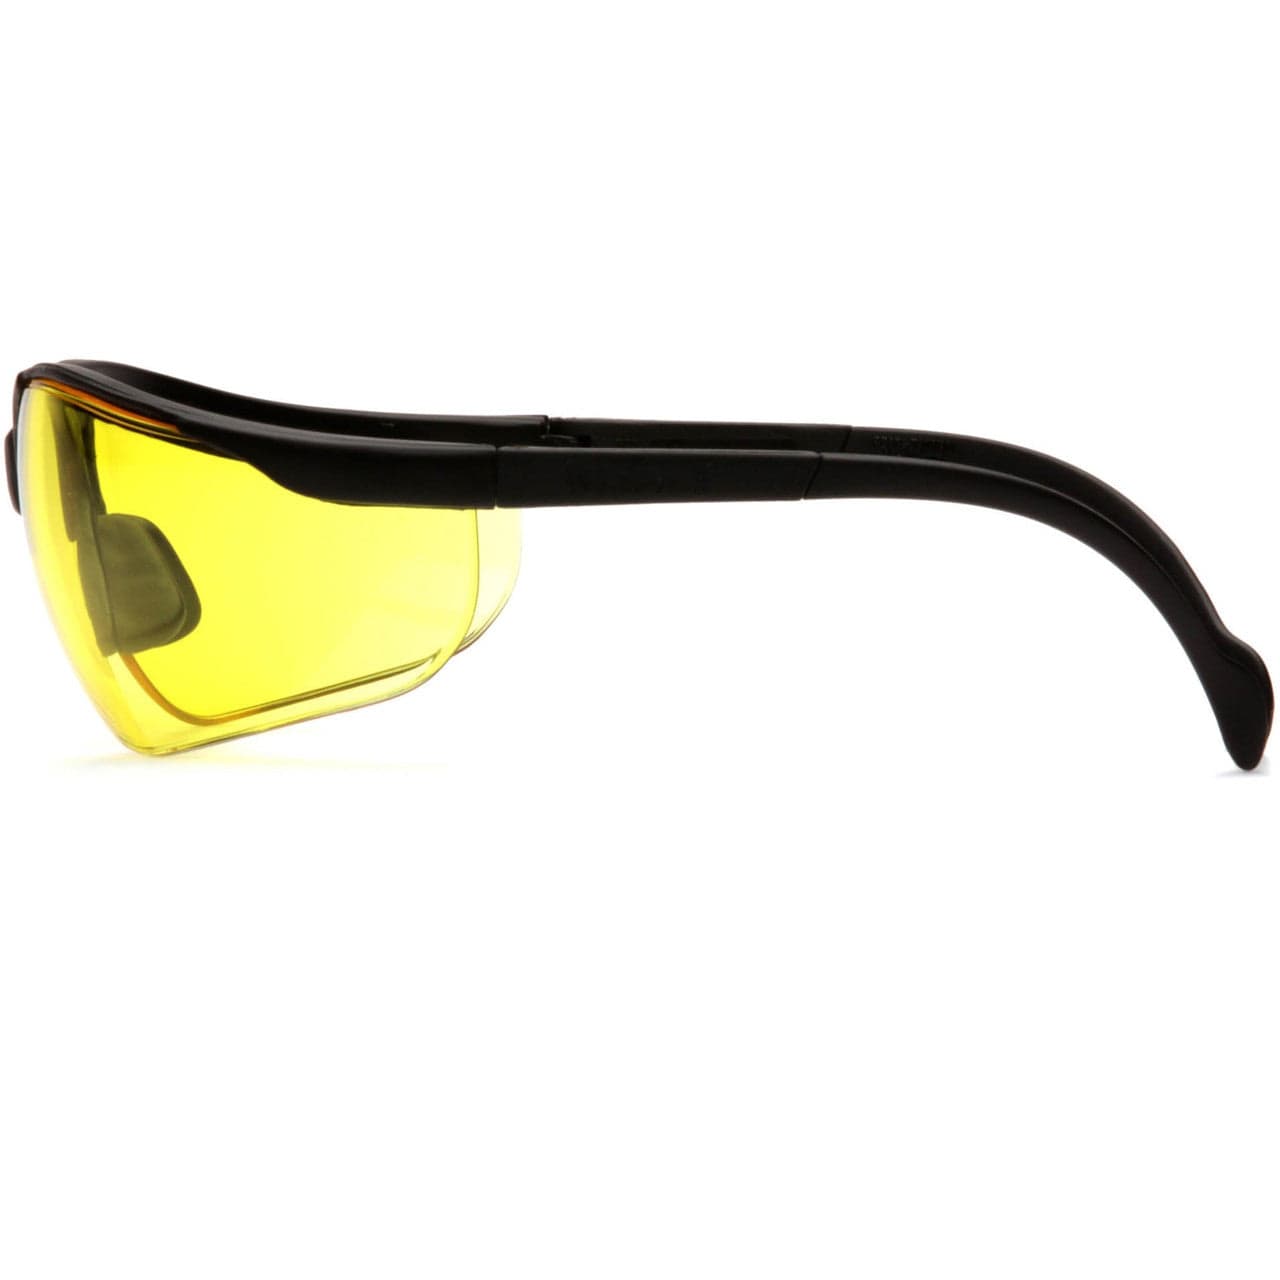 Pyramex Venture 2 Safety Glasses Black Frame Amber Lens SB1830S Side View